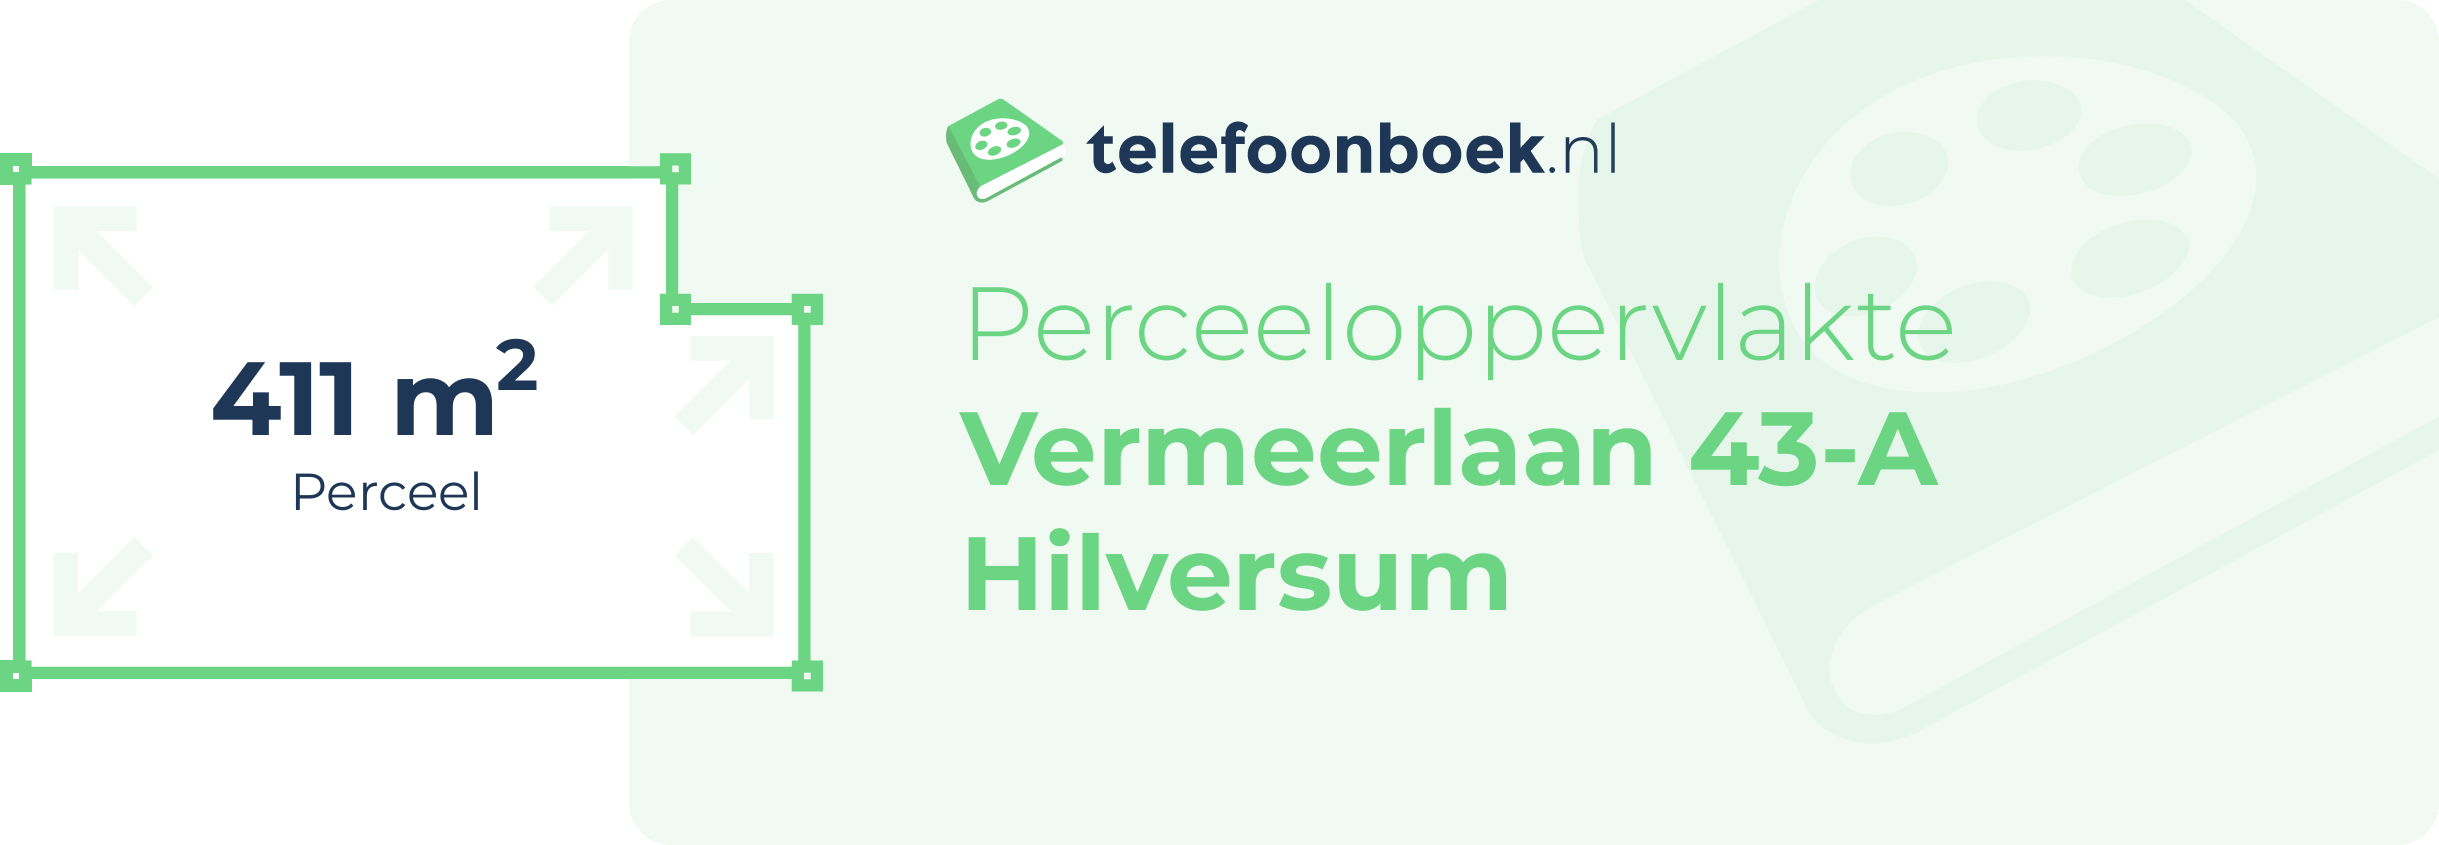 Perceeloppervlakte Vermeerlaan 43-A Hilversum